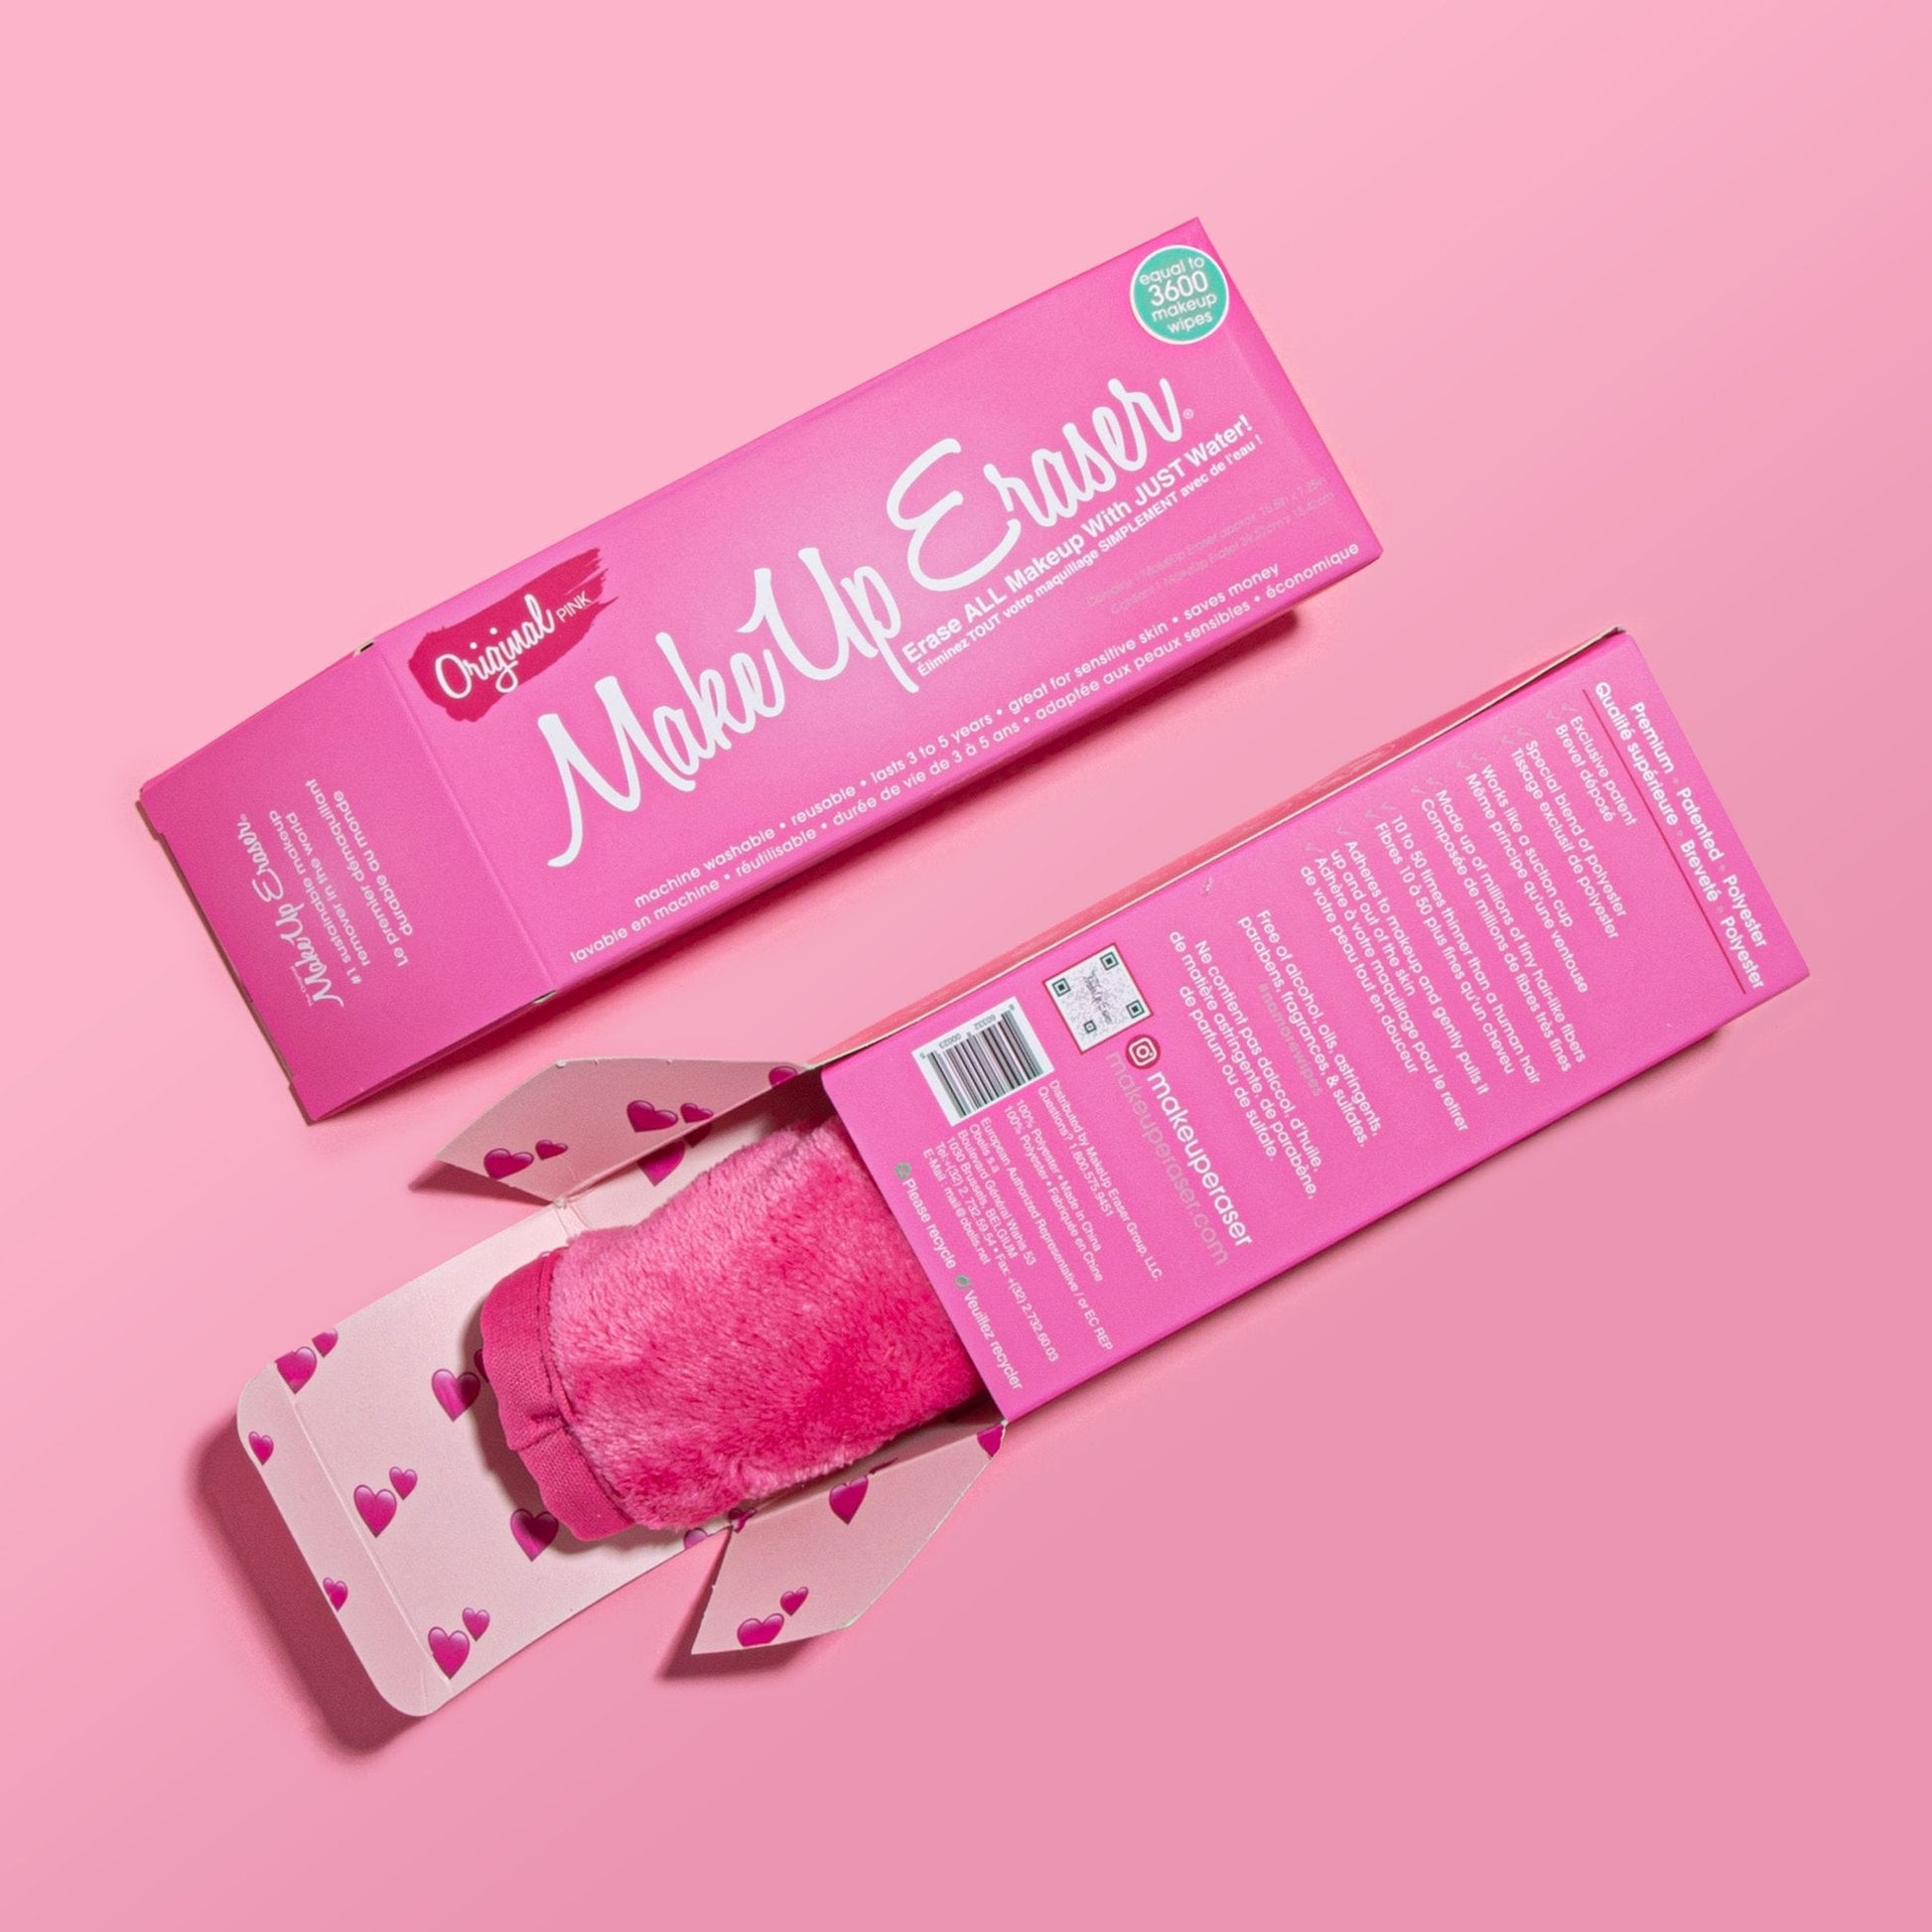 Front of Original Pink MakeUp Eraser packaging next to the back of Original Pink MakeUp Eraser packaging. The back of the packaging is open with a rolled-up Original Pink MakeUp Eraser peeking out.